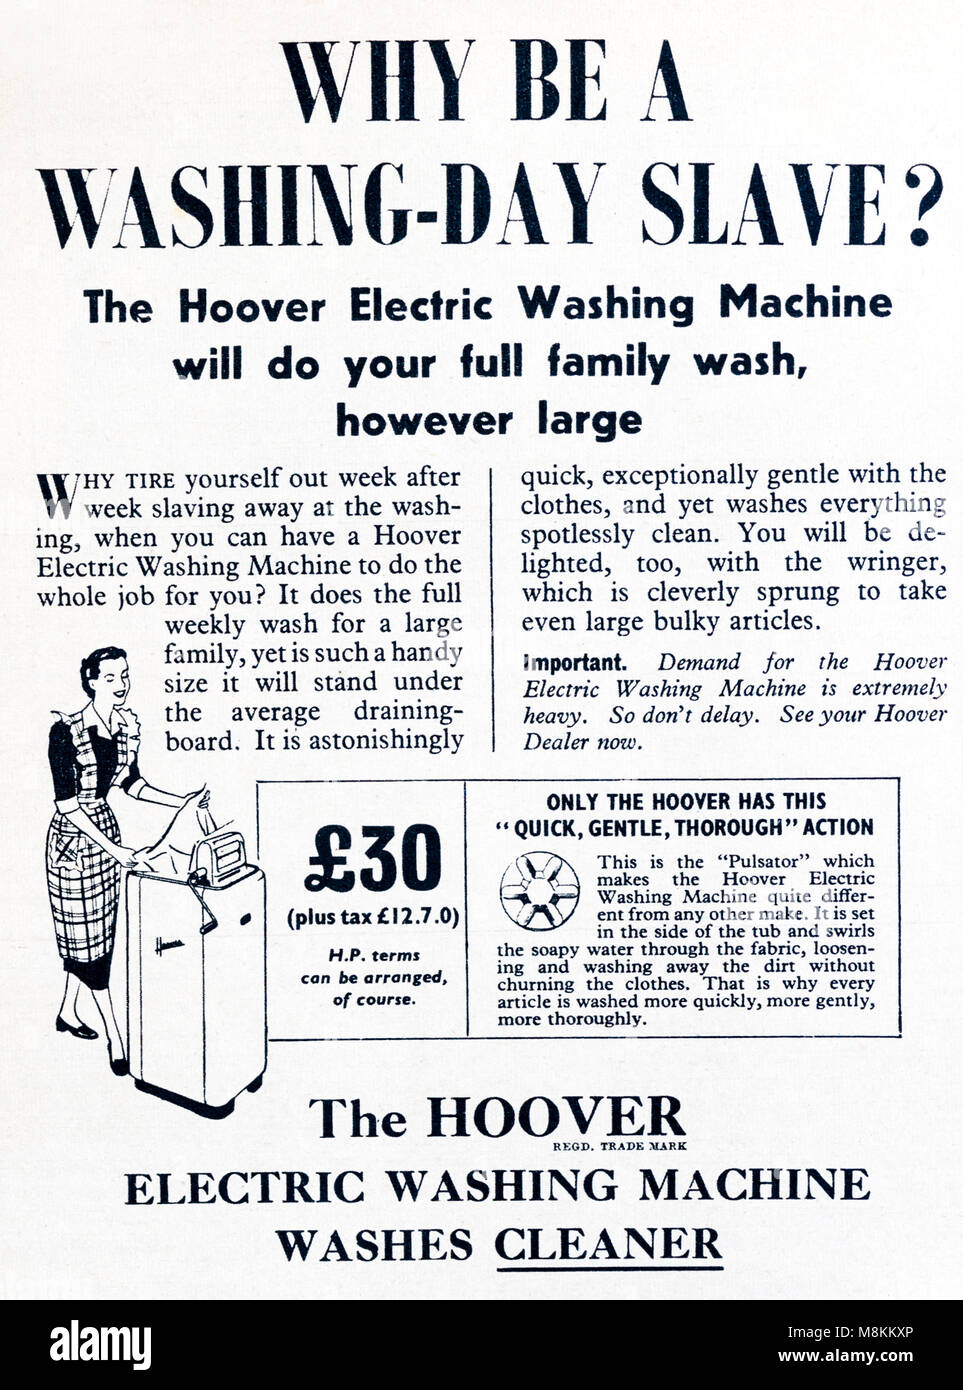 1950s magazine advertisement advertising Hoover washing machines. Stock Photo